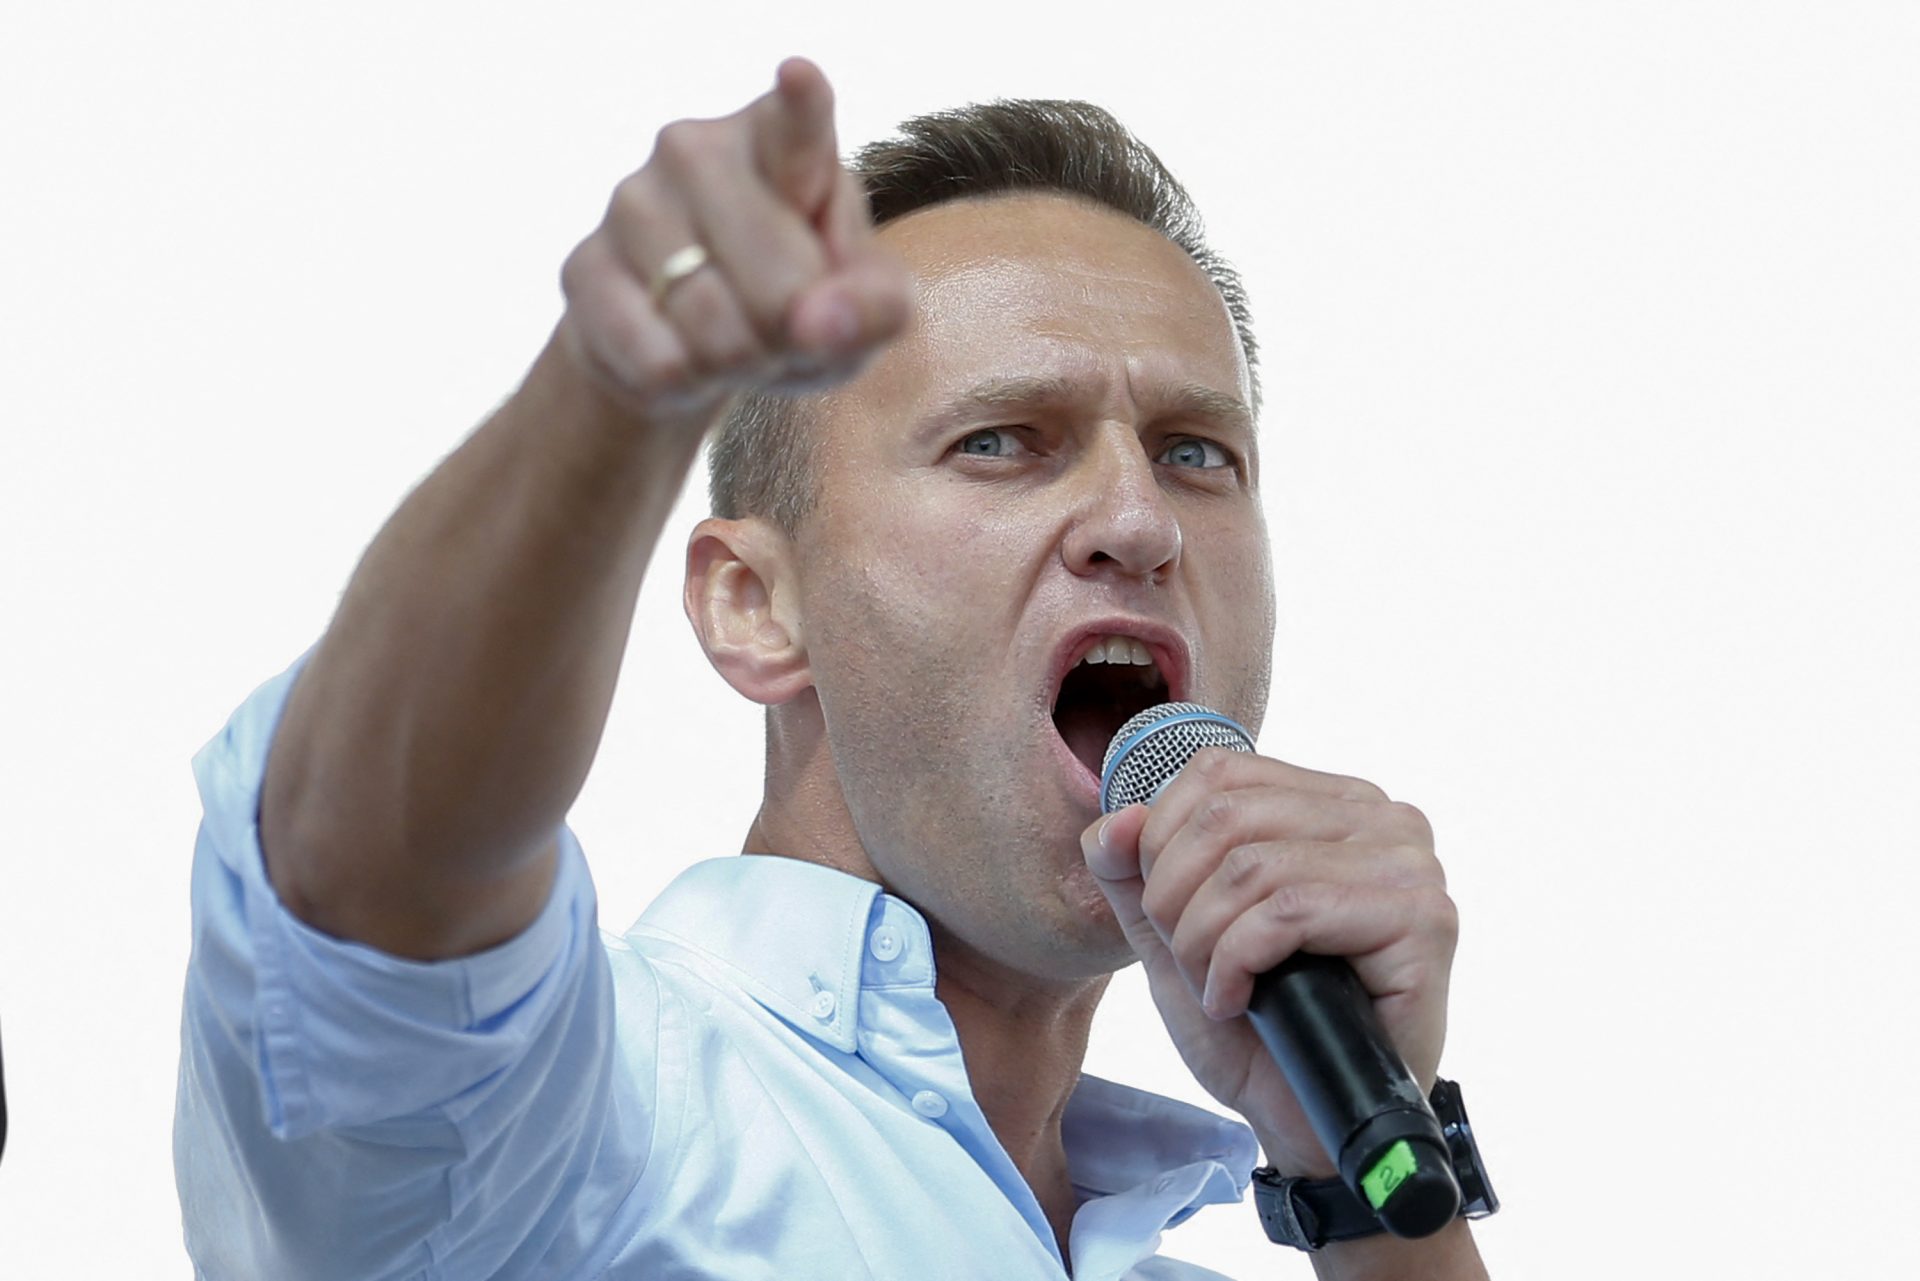 Morreu Alexei Navalny, avança imprensa internacional